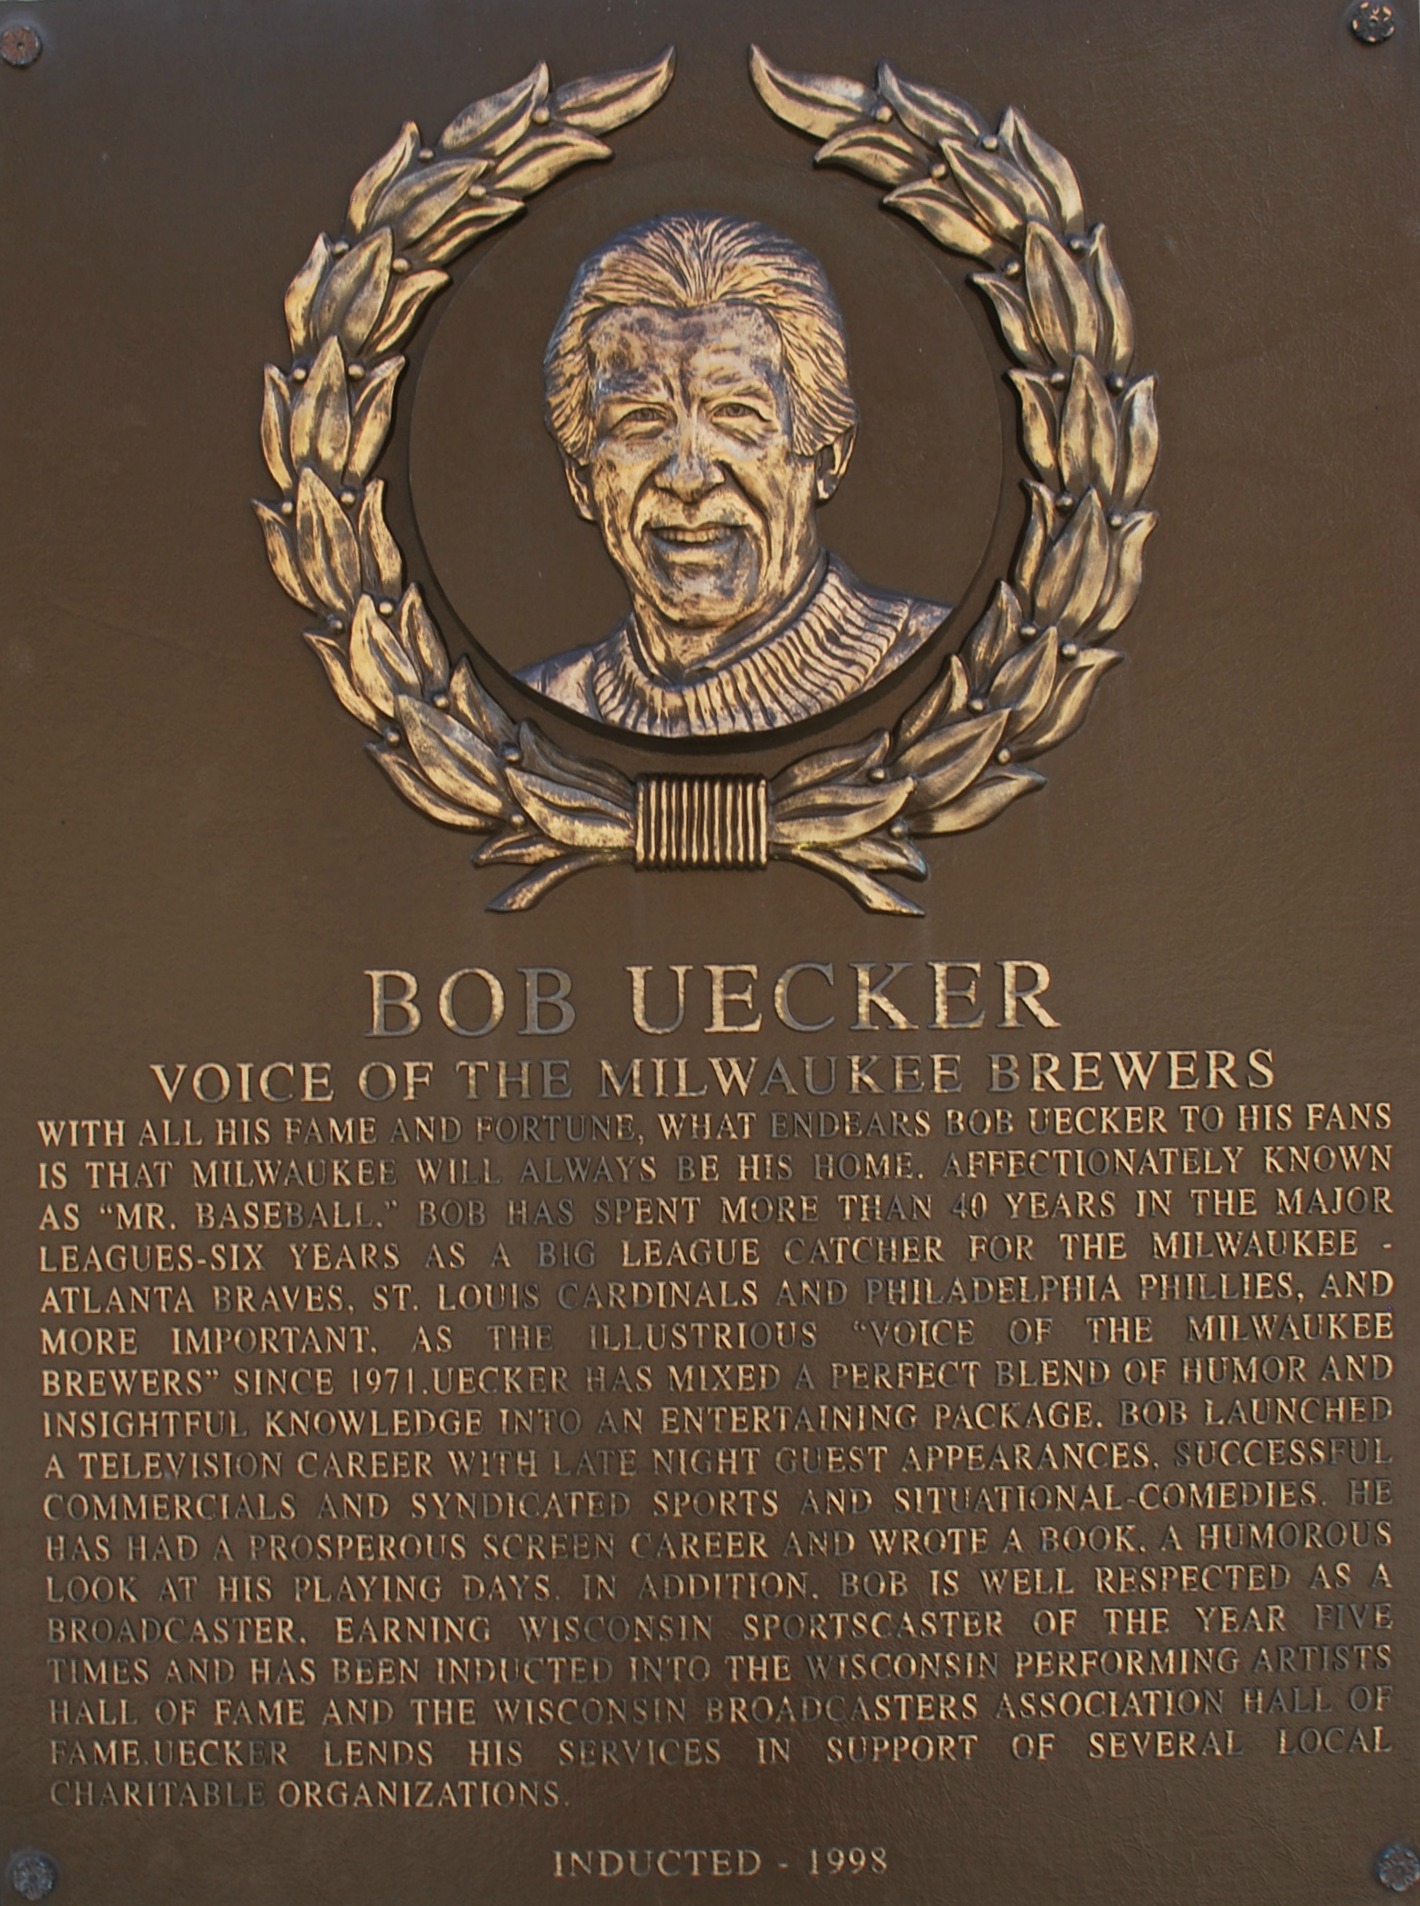 Hall of Fame Baseball Announcer Bob Uecker PSA for ALS Association 